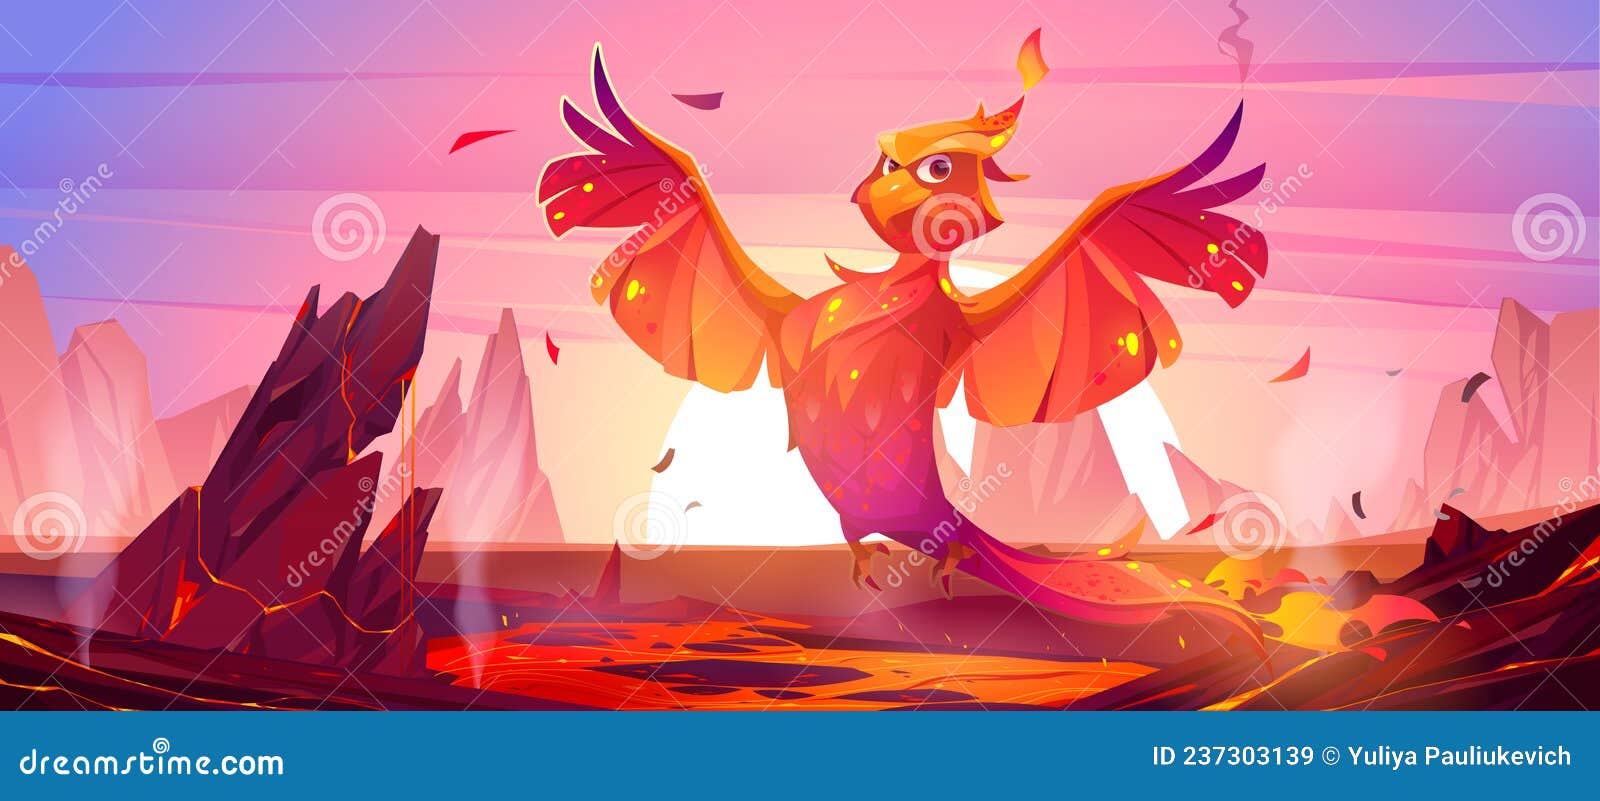 phoenix or fenix fire bird cartoon character rise